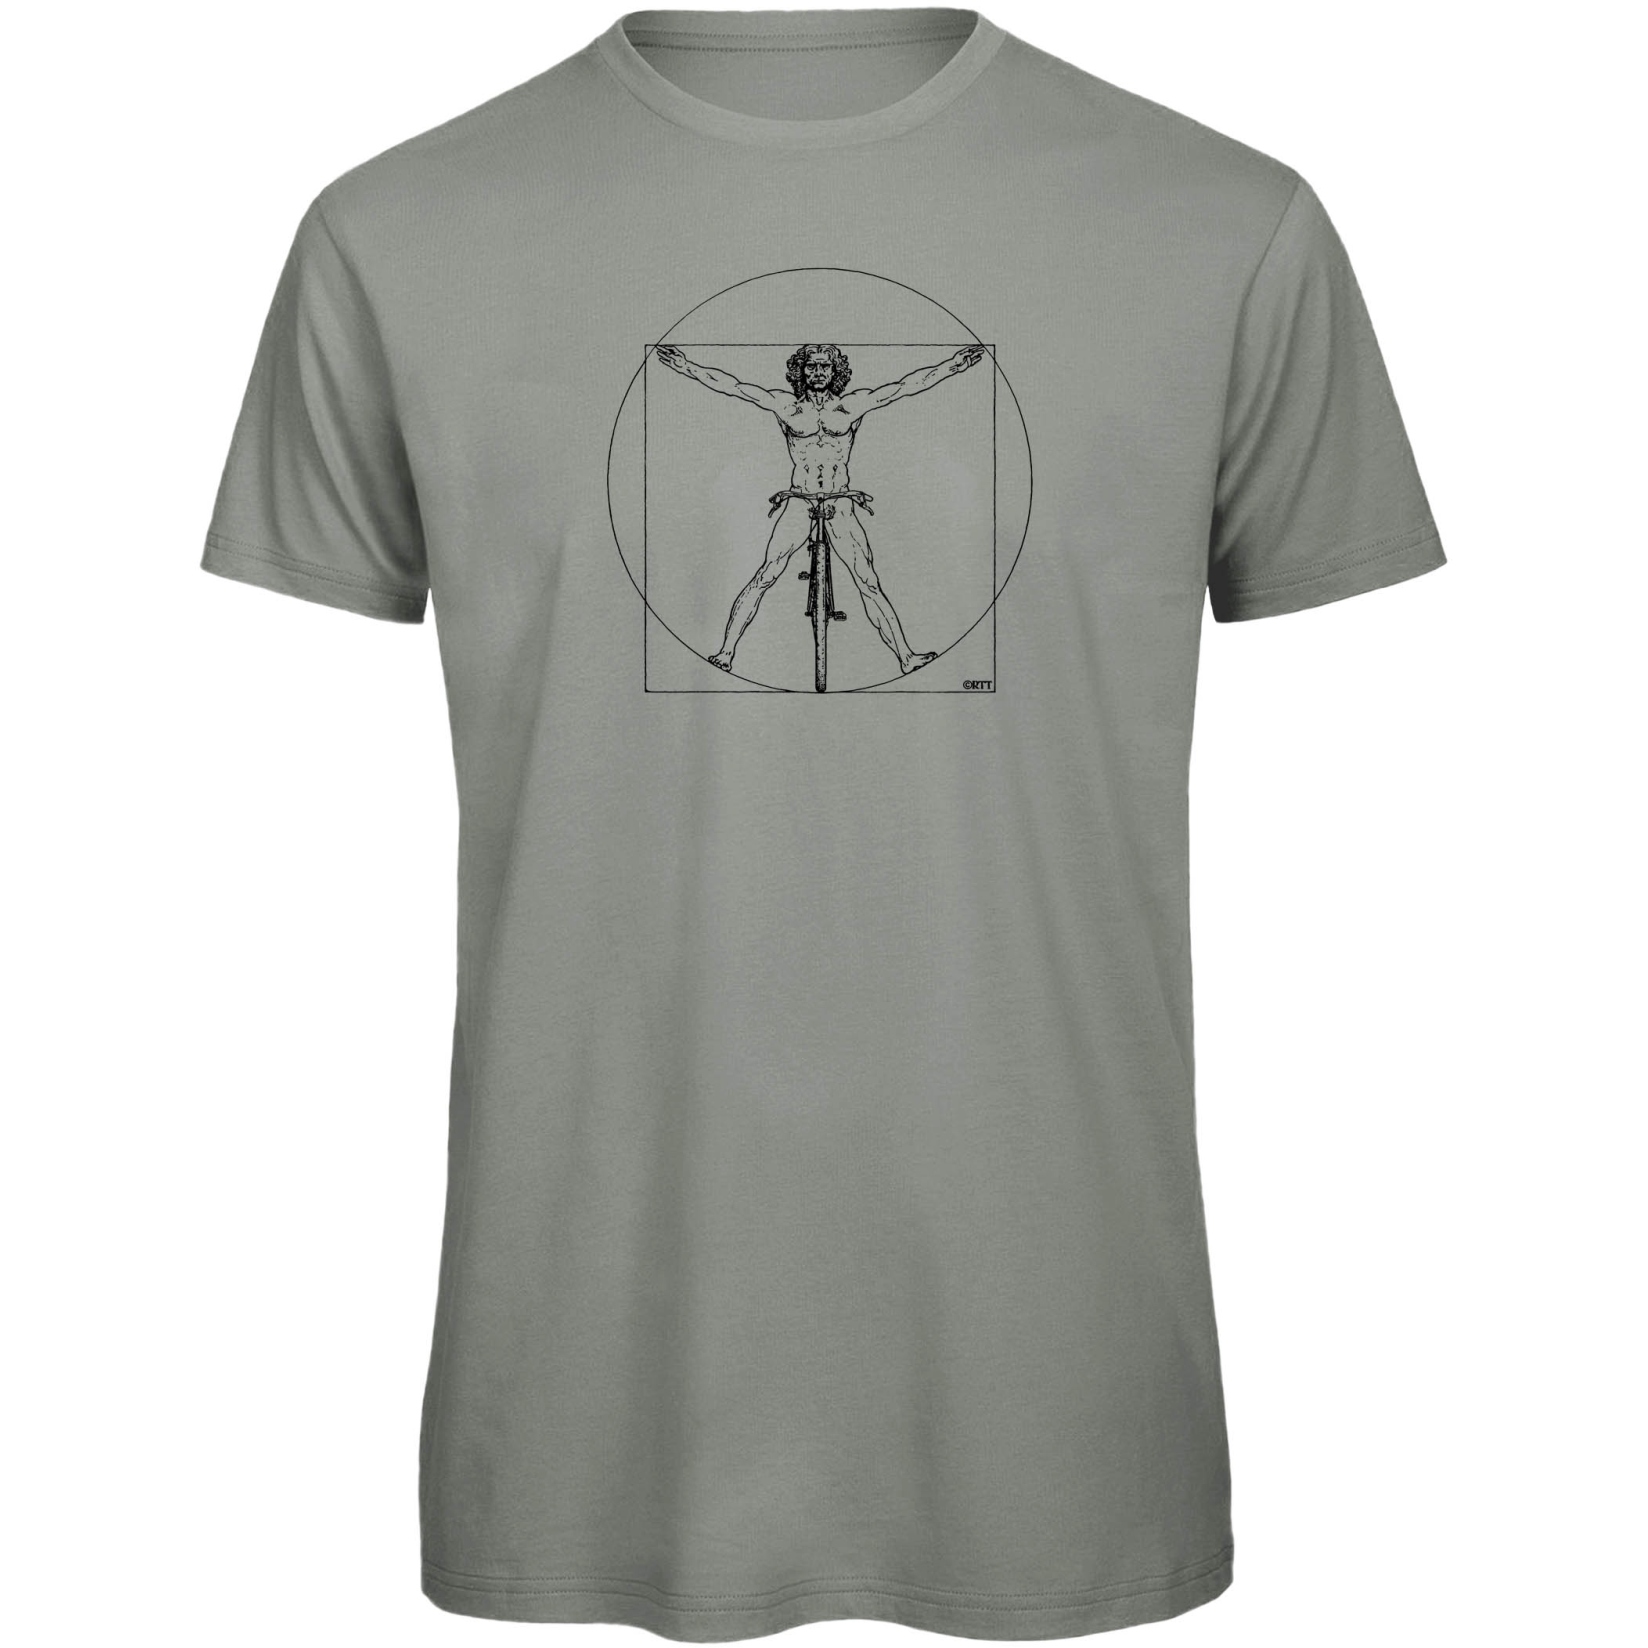 Picture of RTTshirts Bike T-Shirt DaVinci - light grey